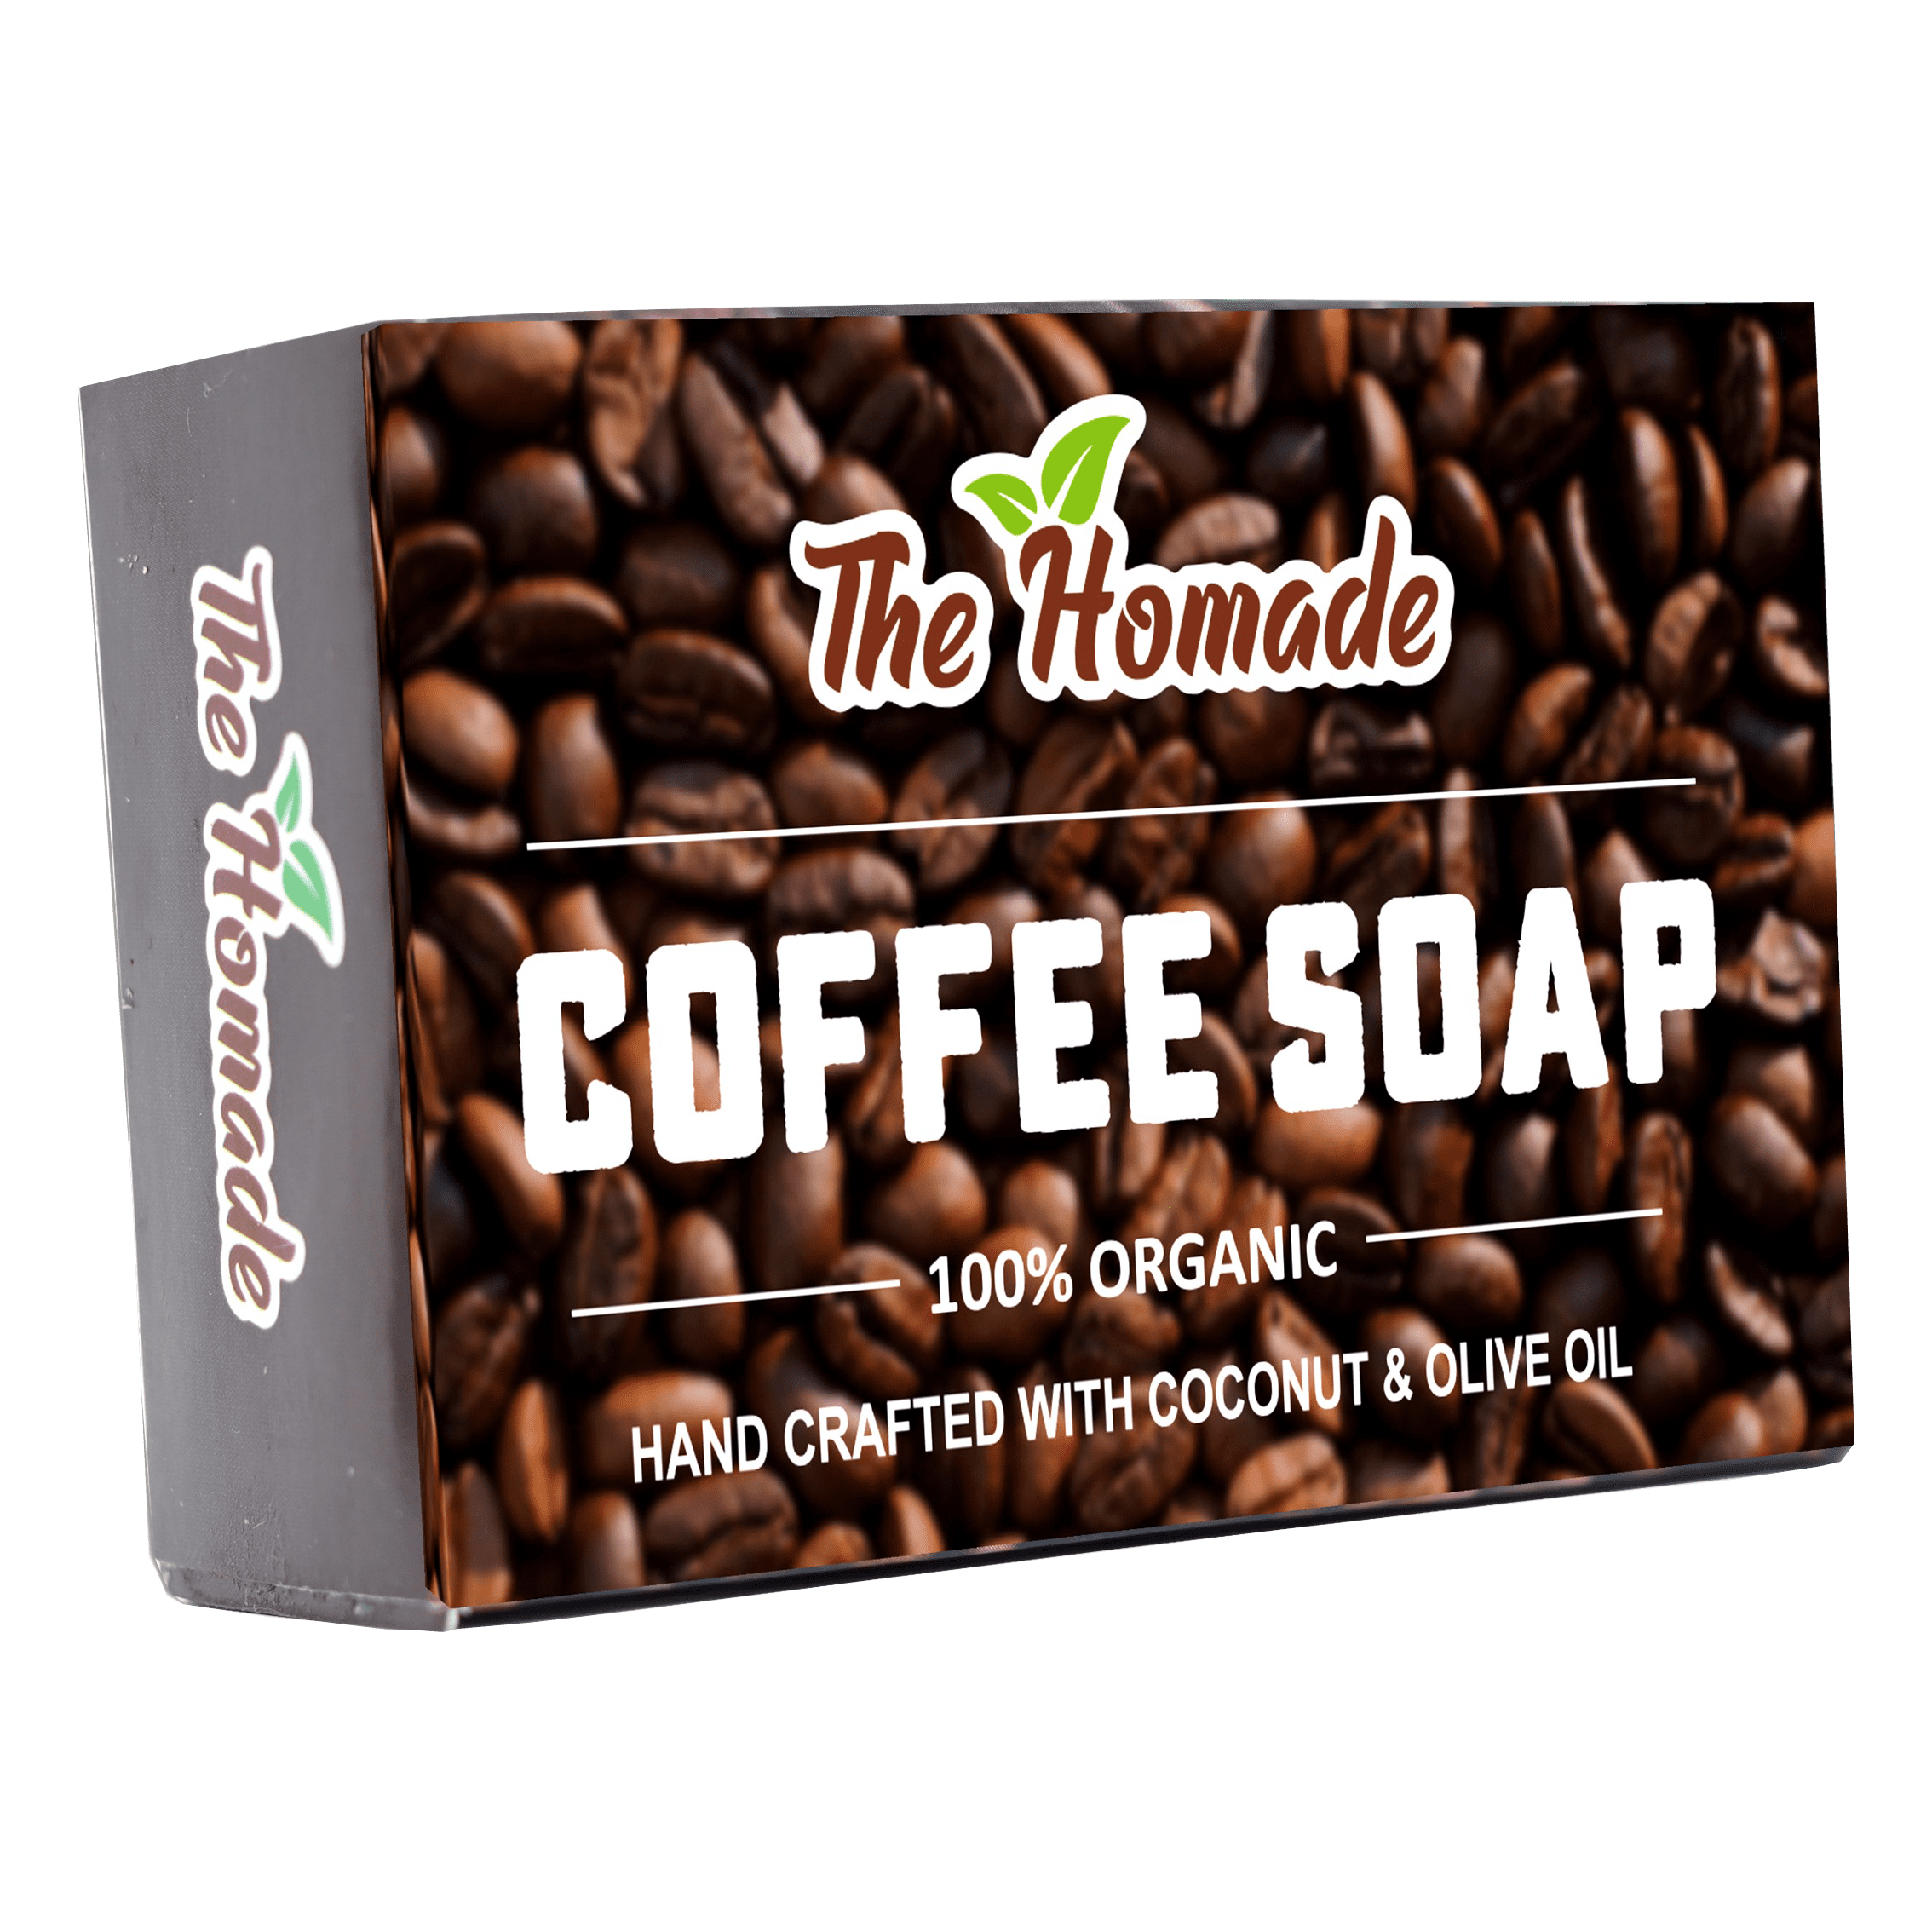 Coffee Soap